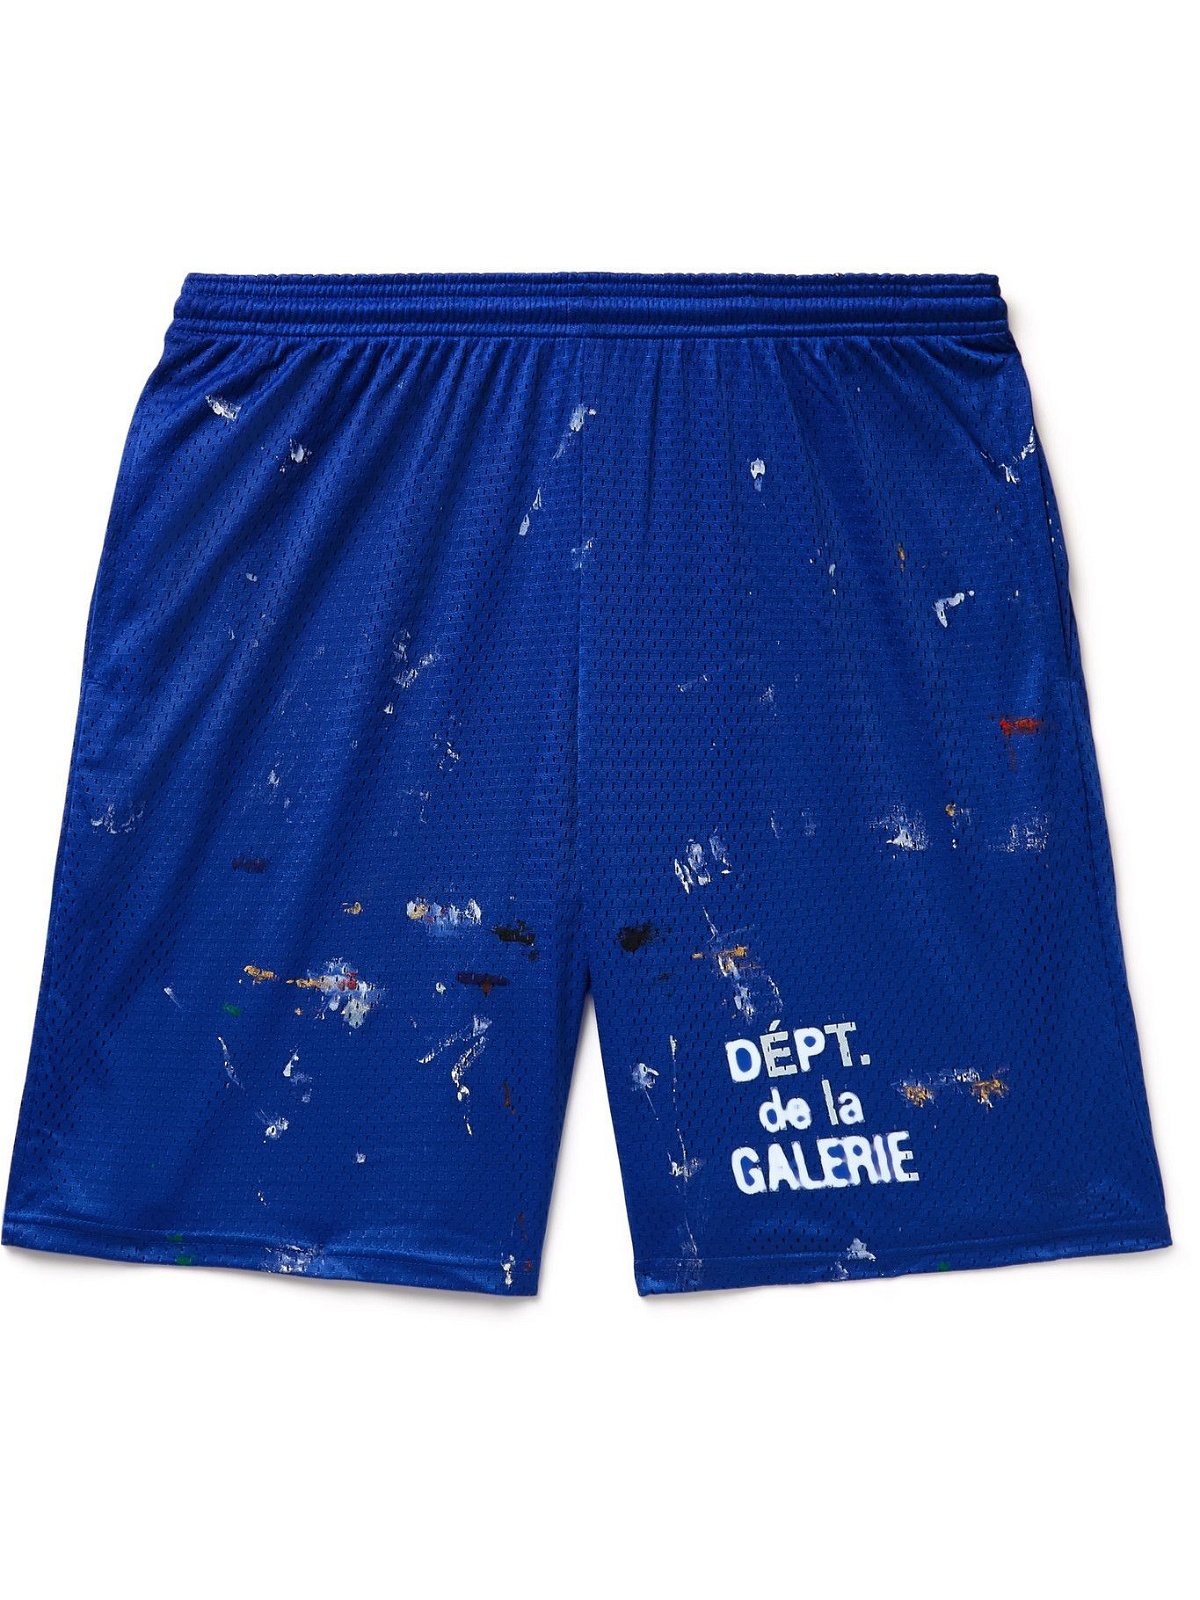 GALLERY DEPT. carpenter Shorts in Blue for Men